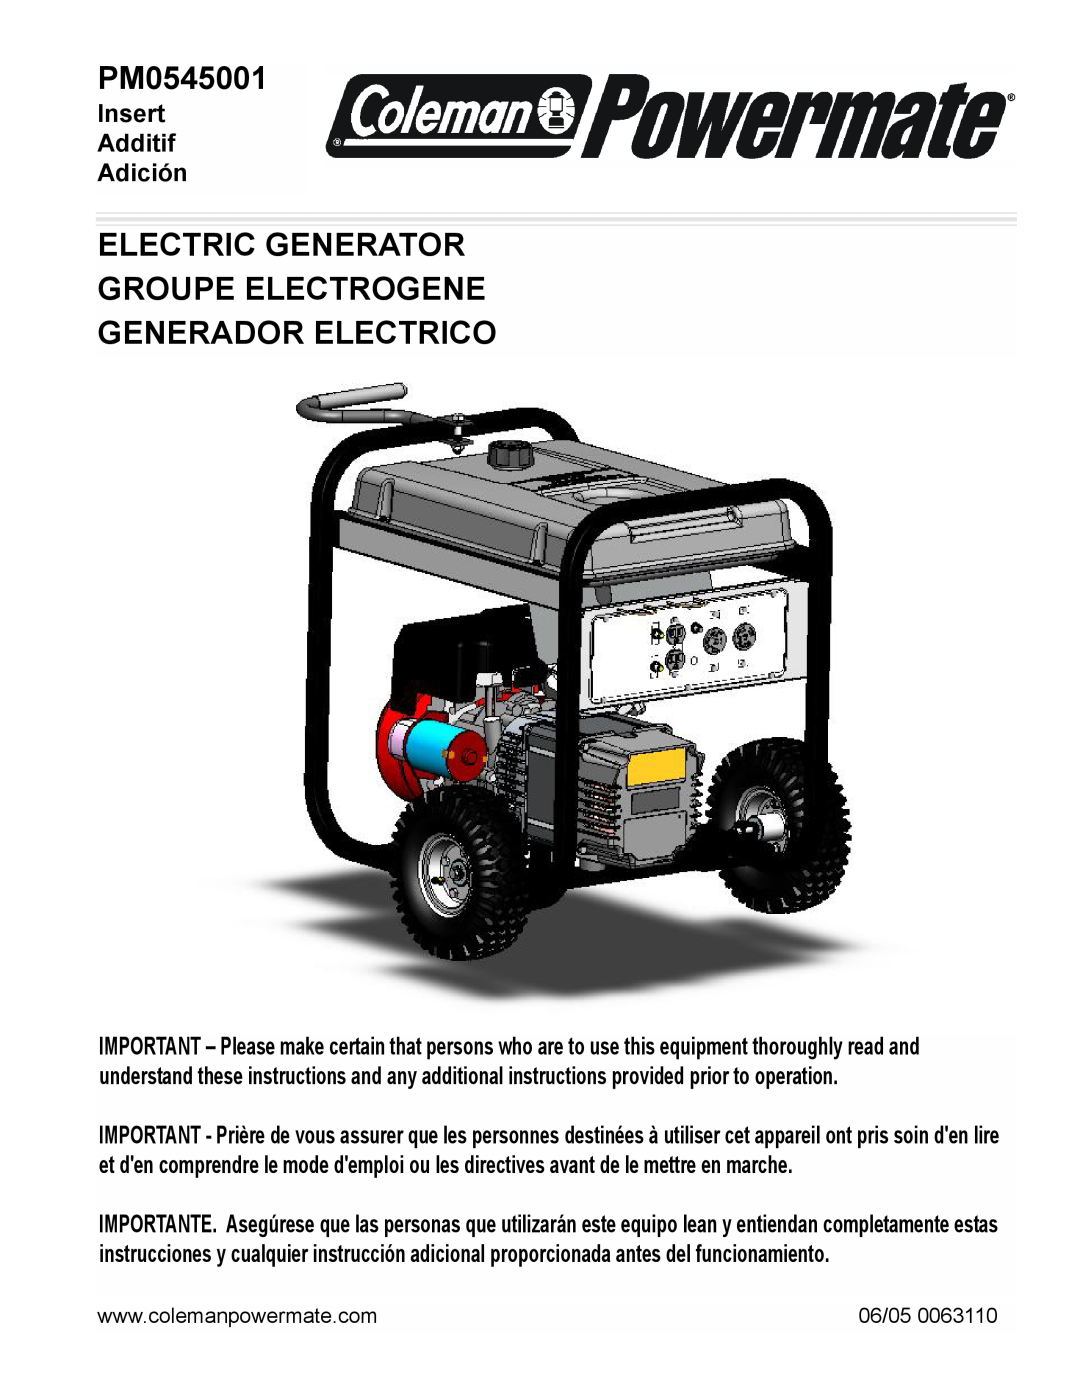 Powermate PM0545001 manual Electric Generator Groupe Electrogene Generador Electrico, Insert Additif Adición, 06/05 